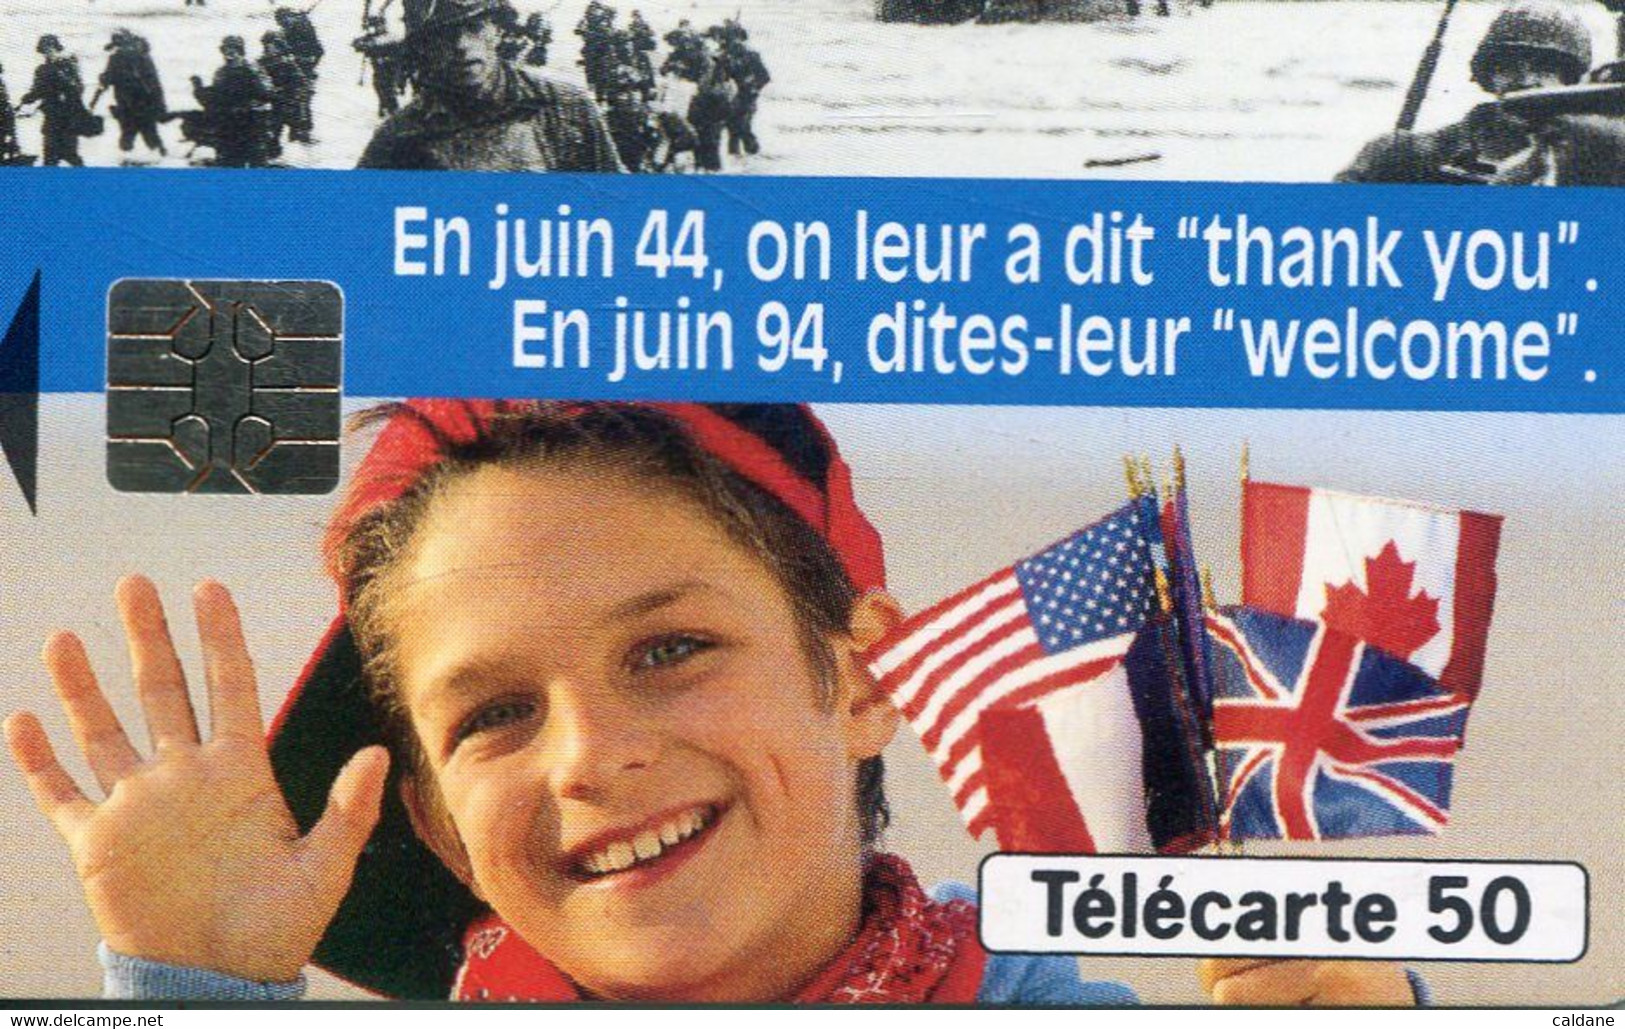 TELECARTE  France Telecom  50 UNITES 600.000 Ex.   1994 - Opérateurs Télécom